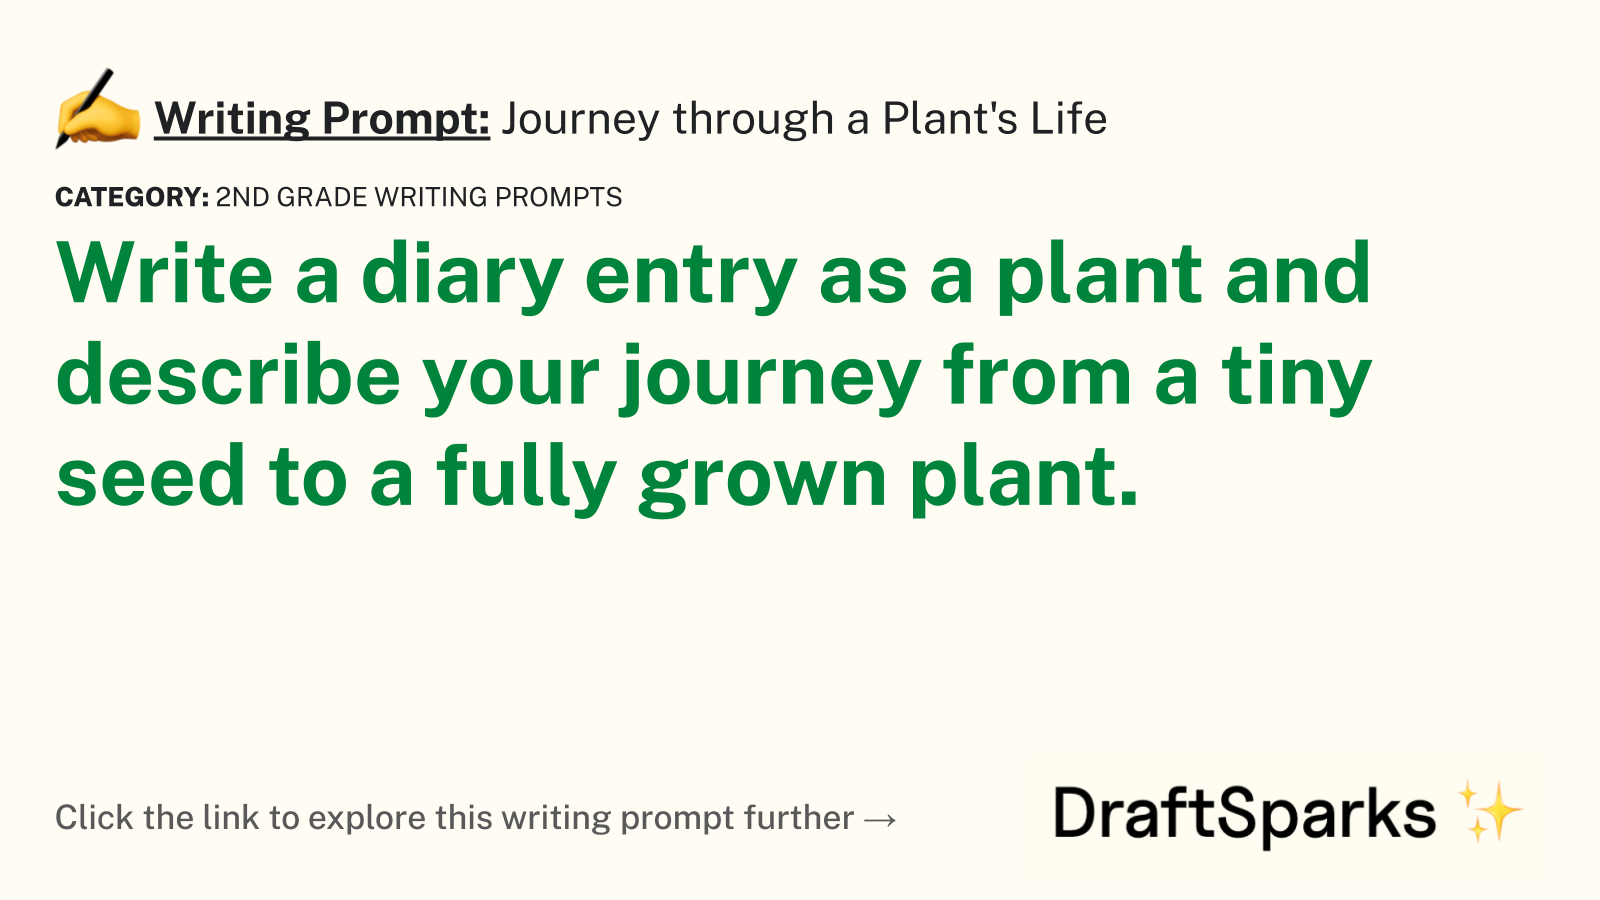 Journey through a Plant’s Life